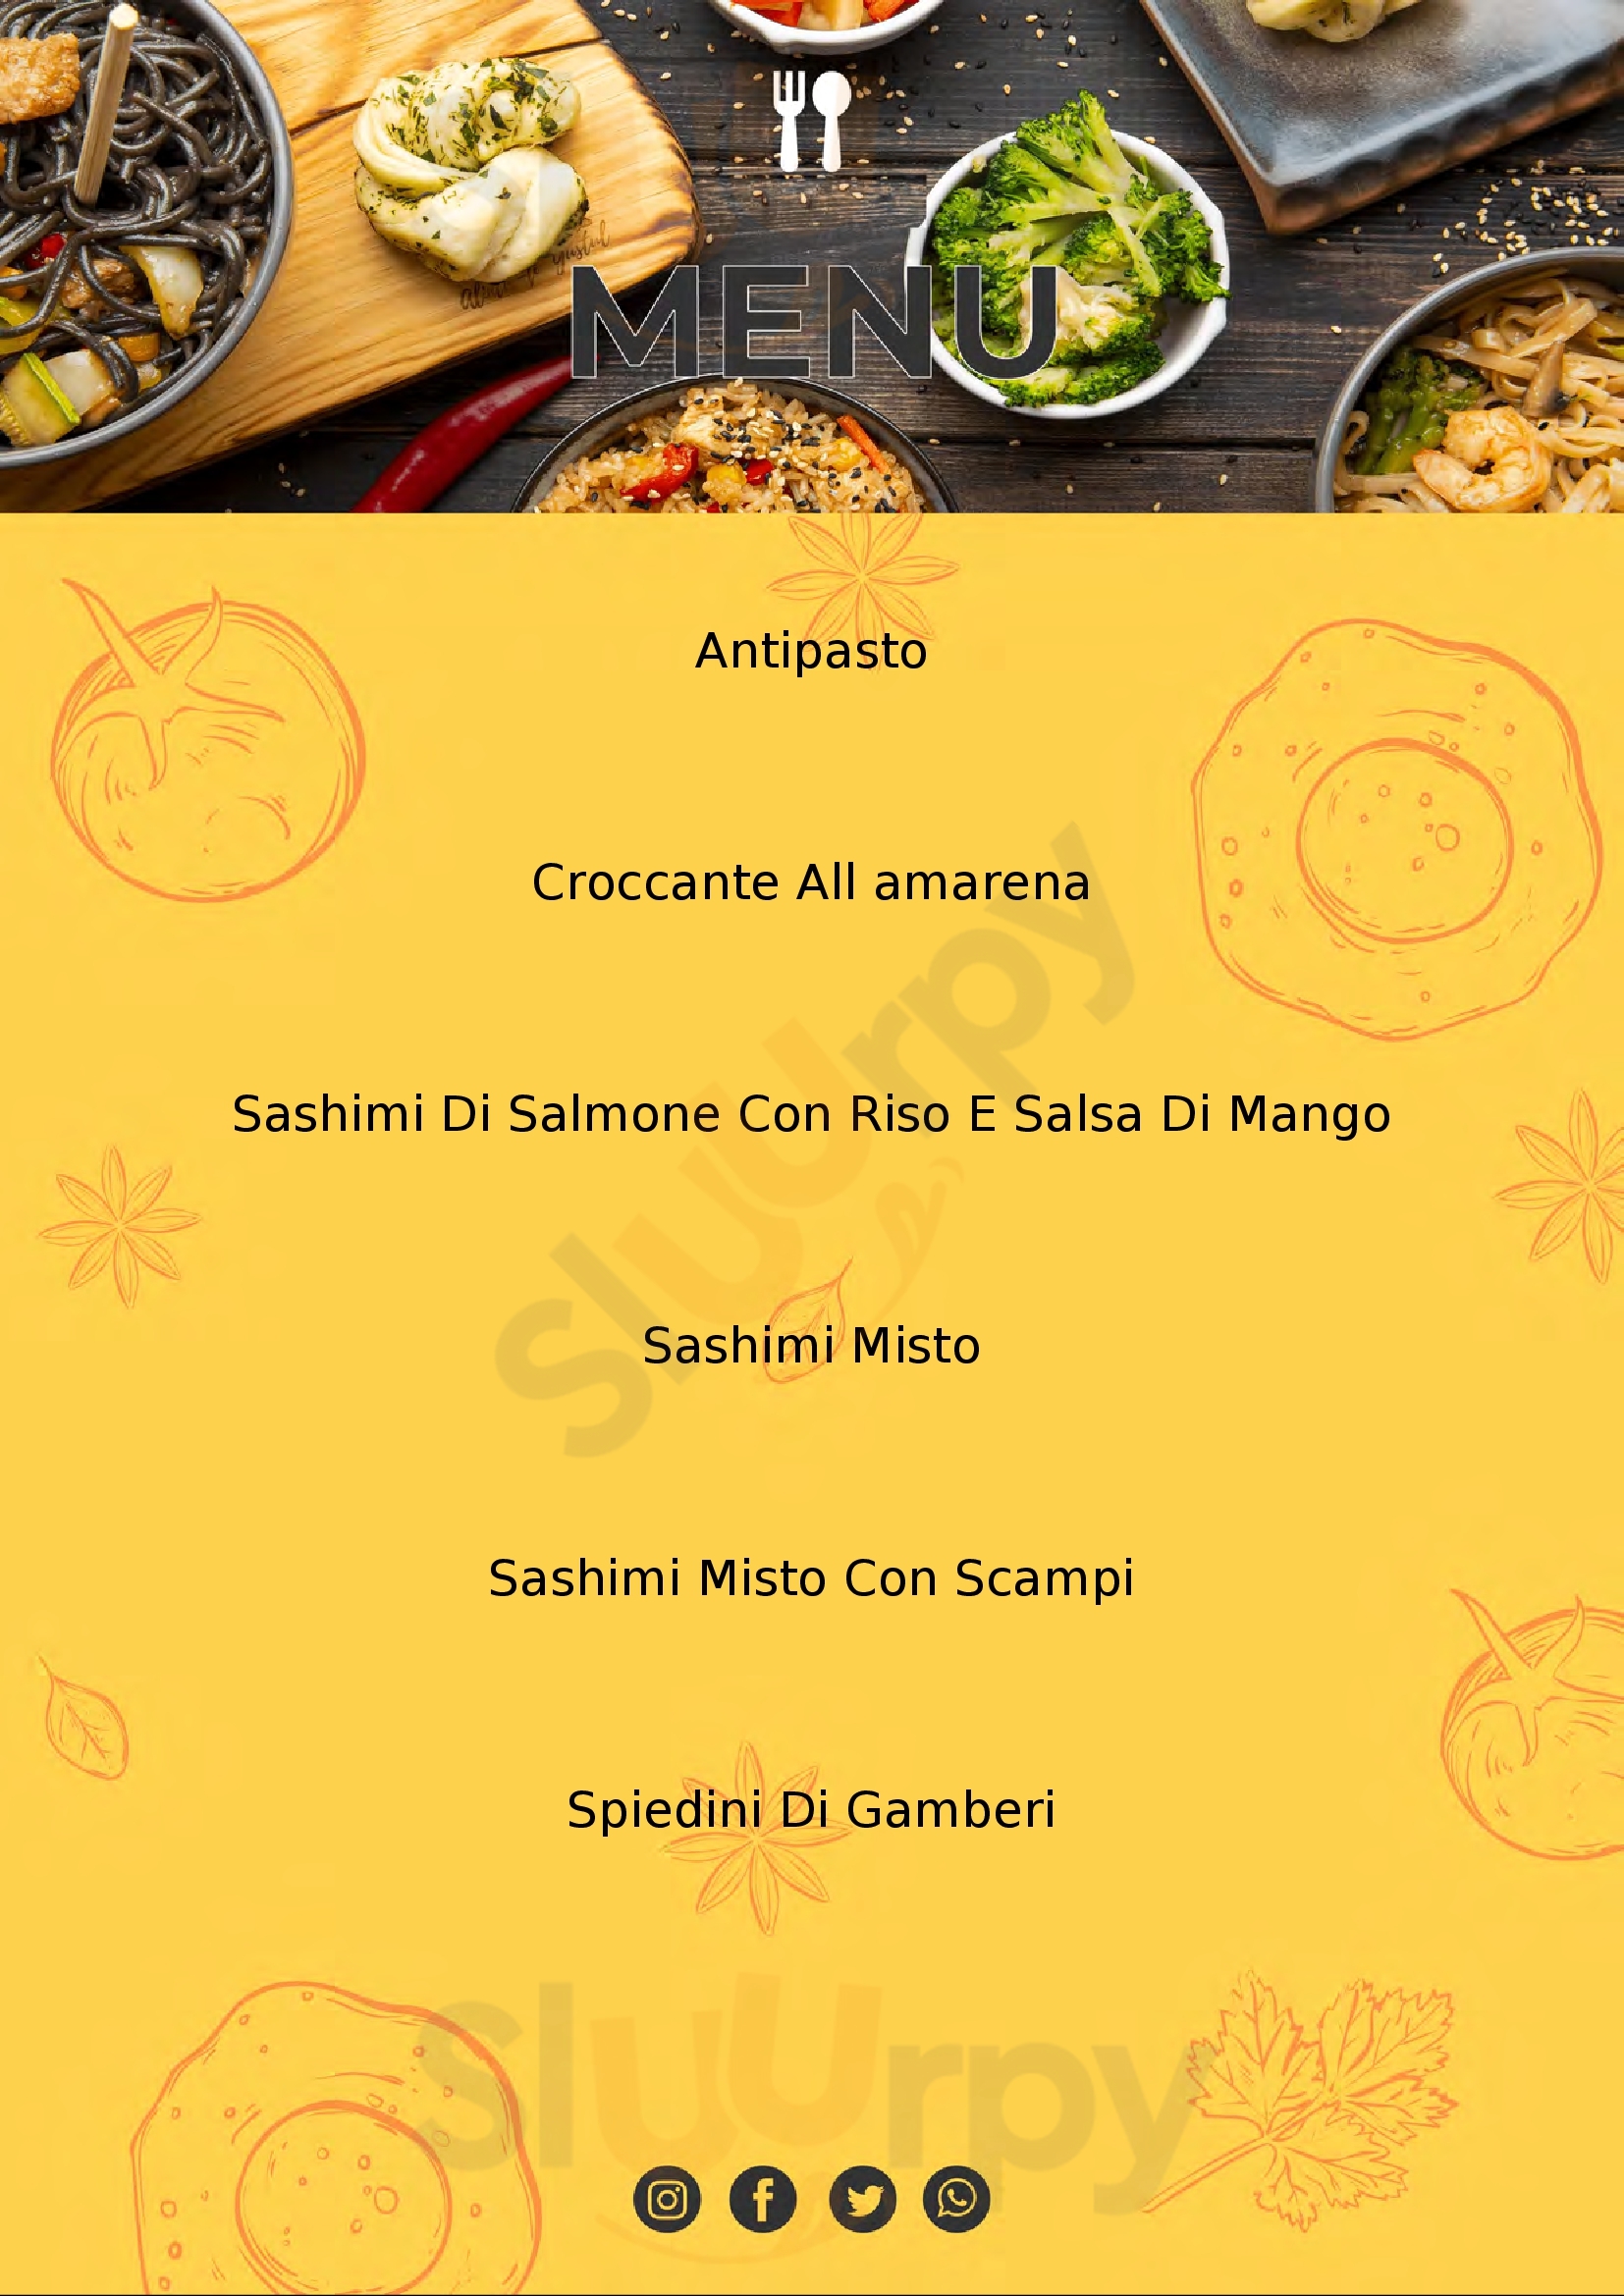 Sushi Wok Restaurant Misano Adriatico Misano Adriatico menù 1 pagina